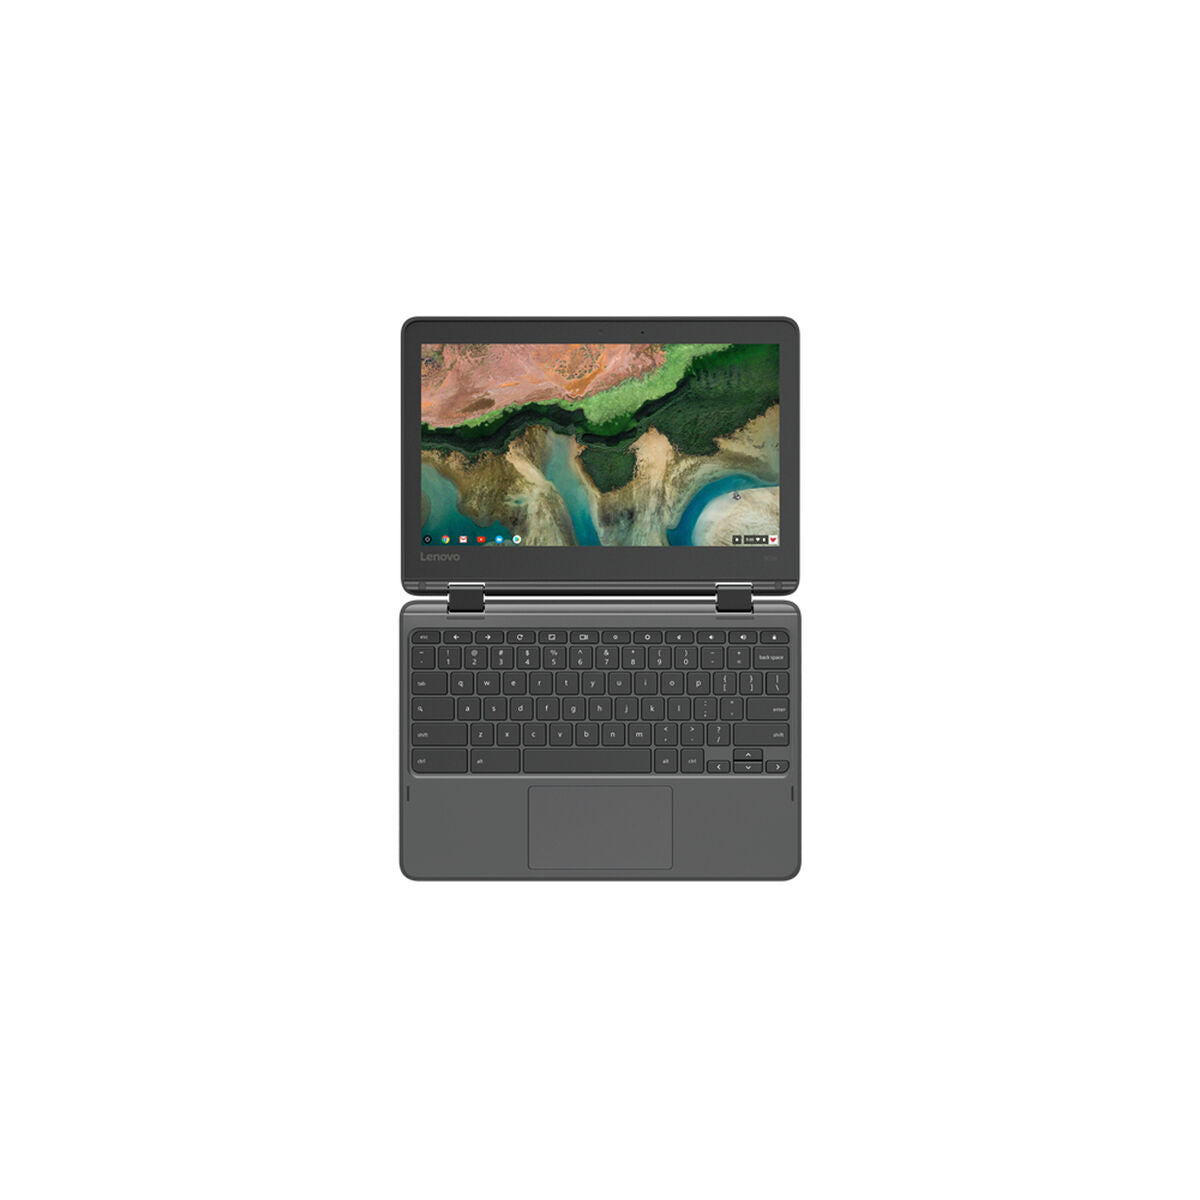 Notebook Lenovo 300e 11,6" AMD A4 9120 4 GB RAM 32 GB Qwerty Spanisch - CA International 